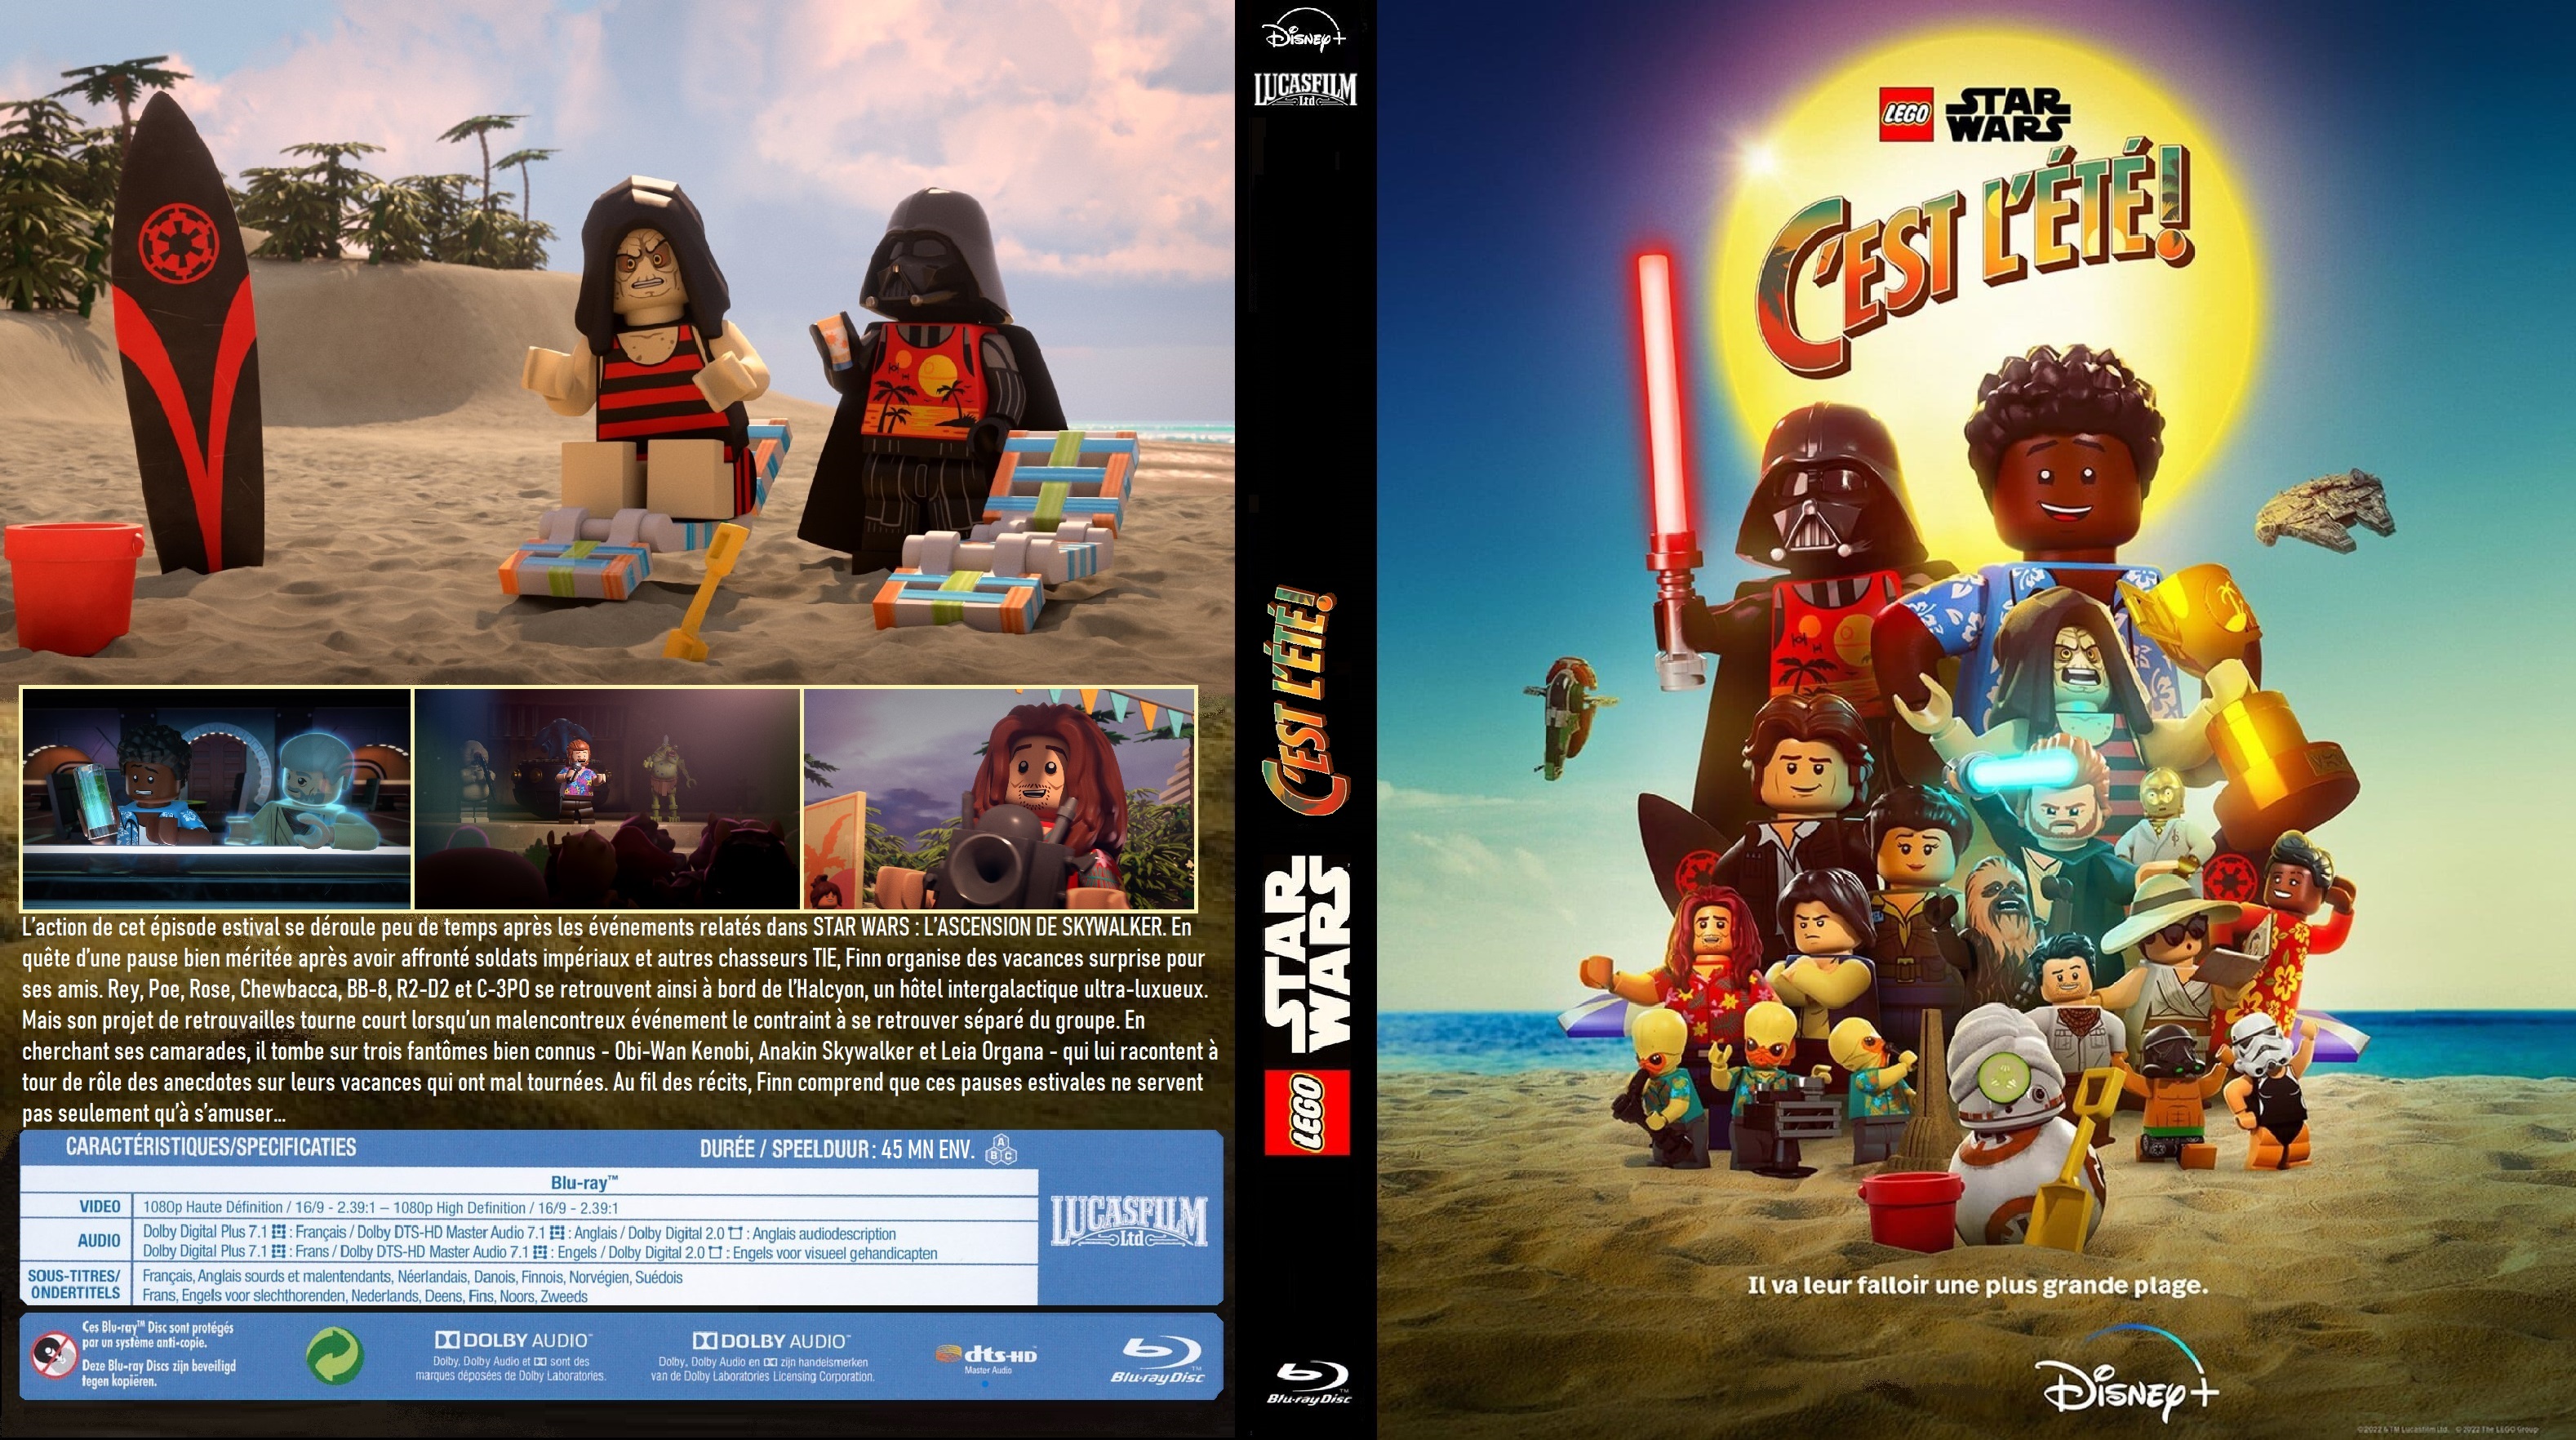 Jaquette DVD Lego Star Wars C